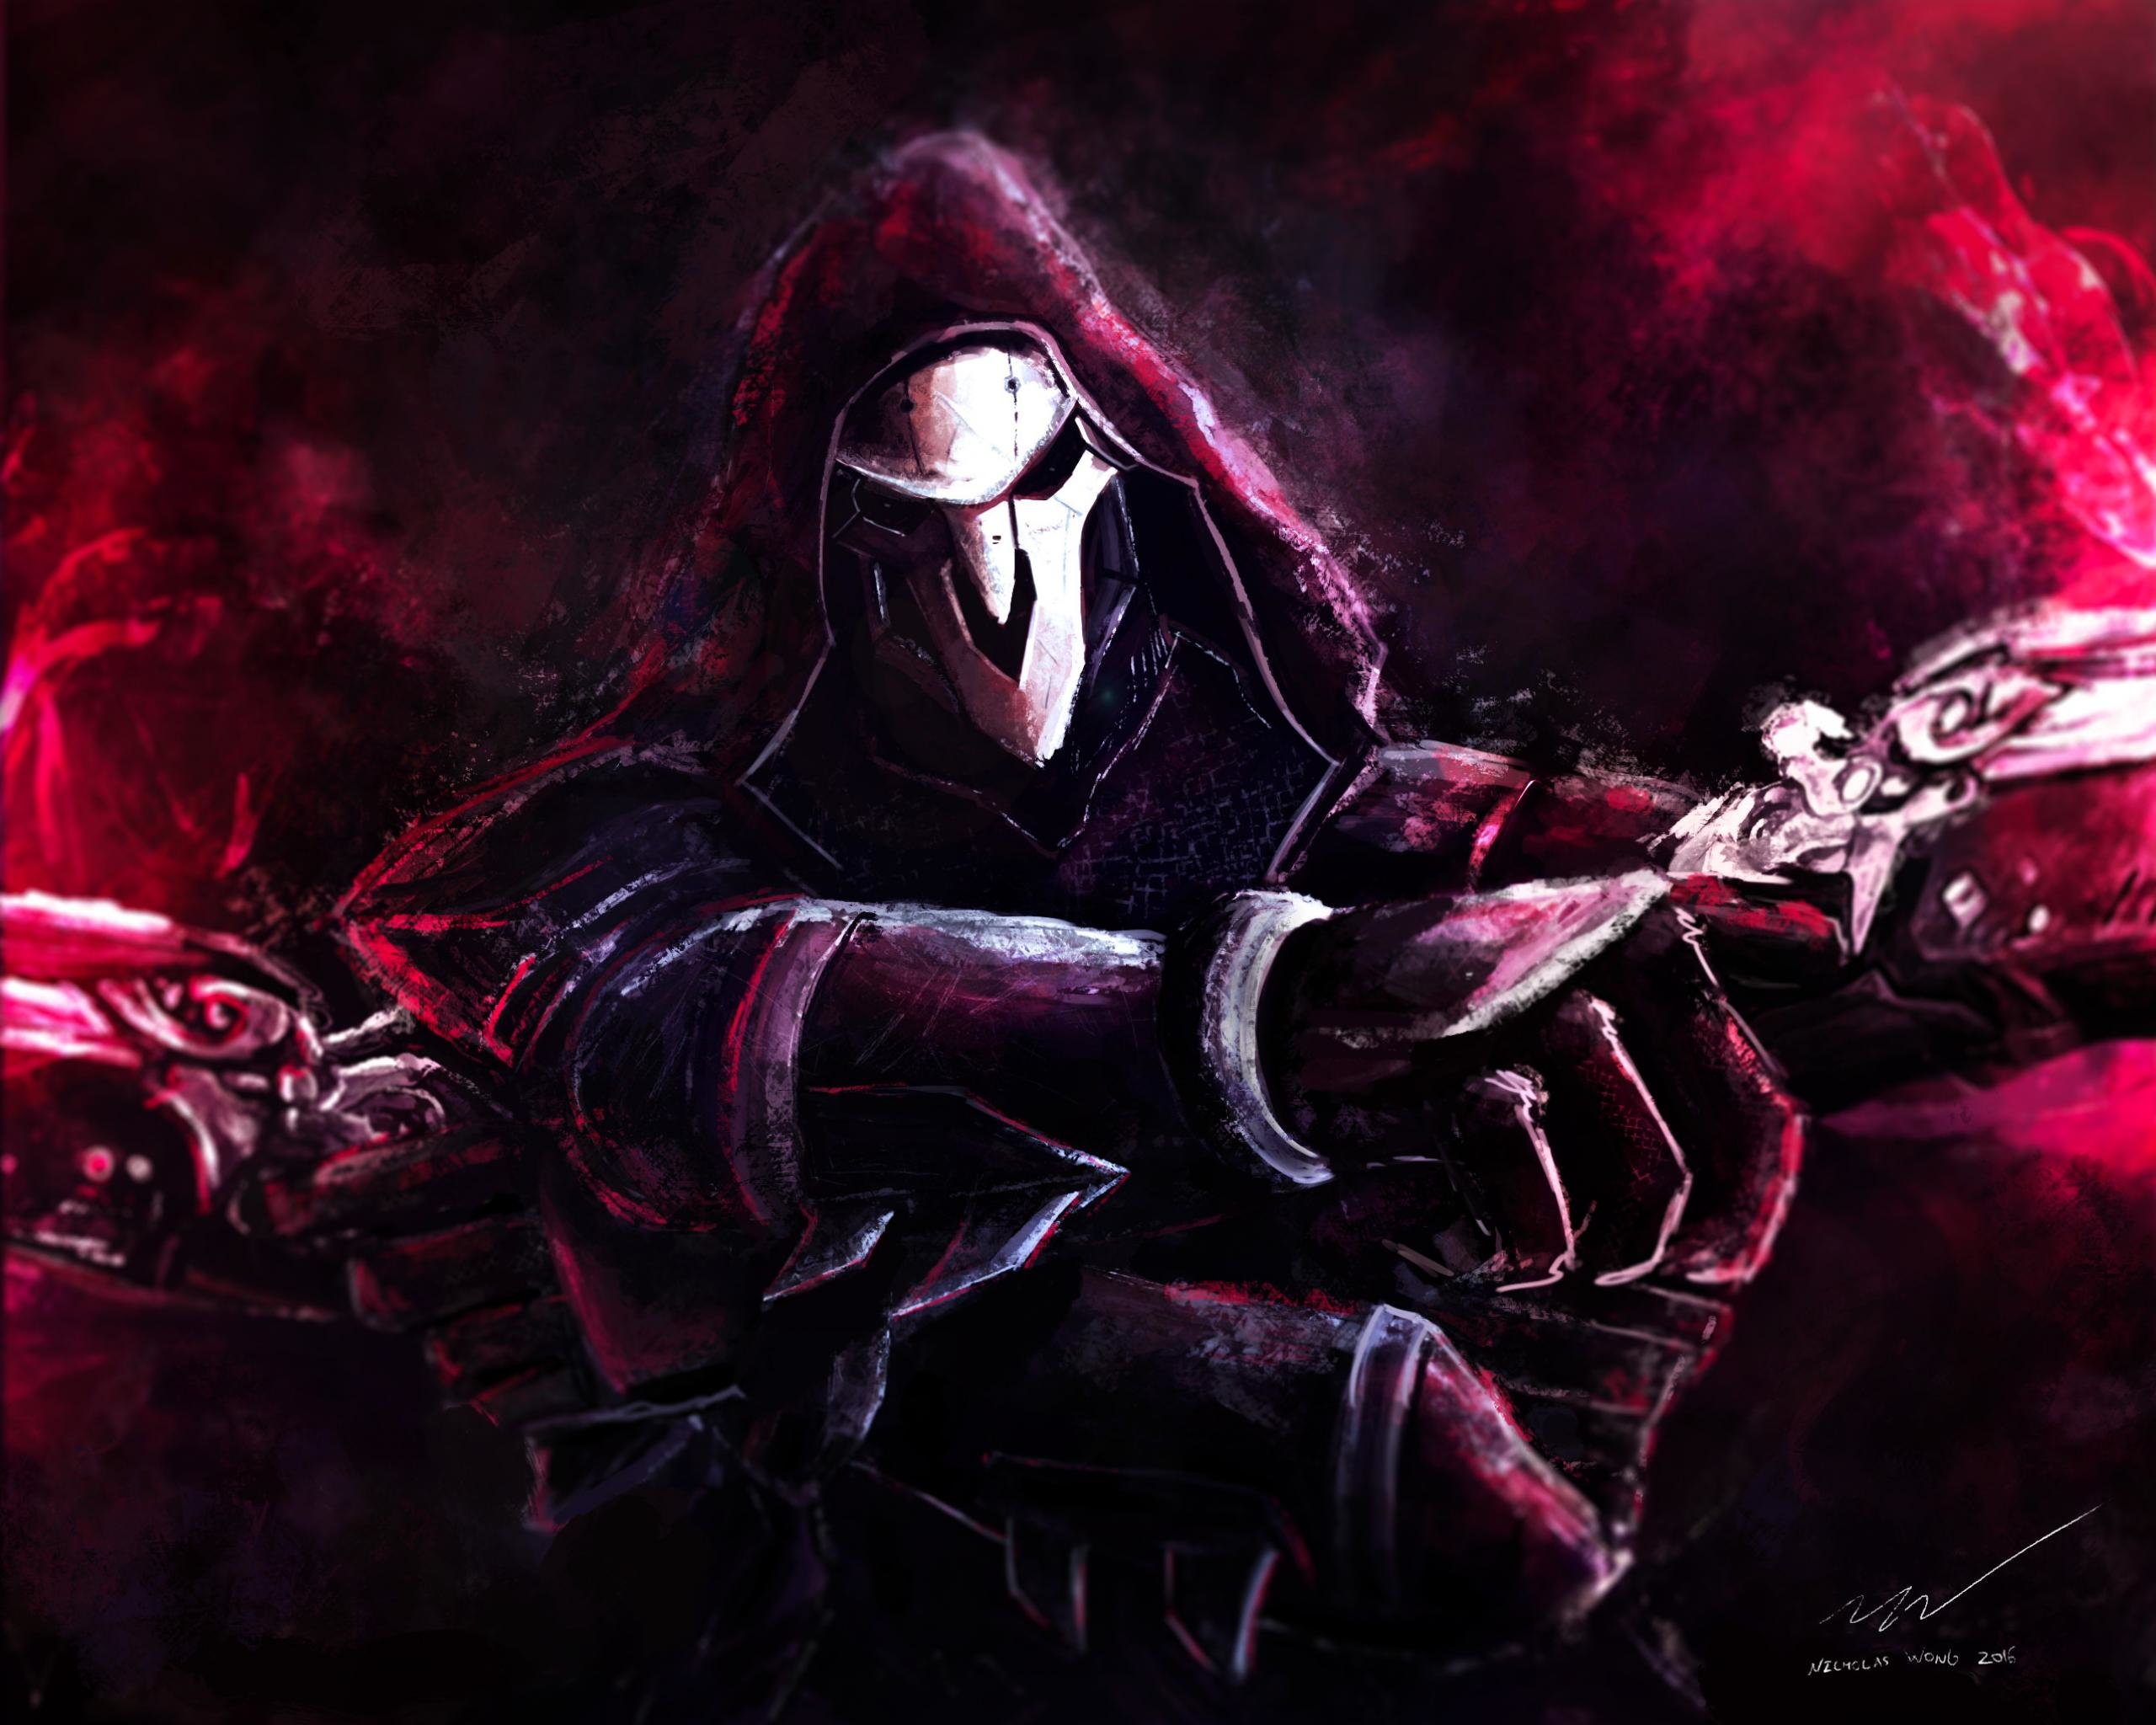 Best Reaper (Overwatch) wallpaper ID:169764 for High Resolution hd 2560x2048 computer